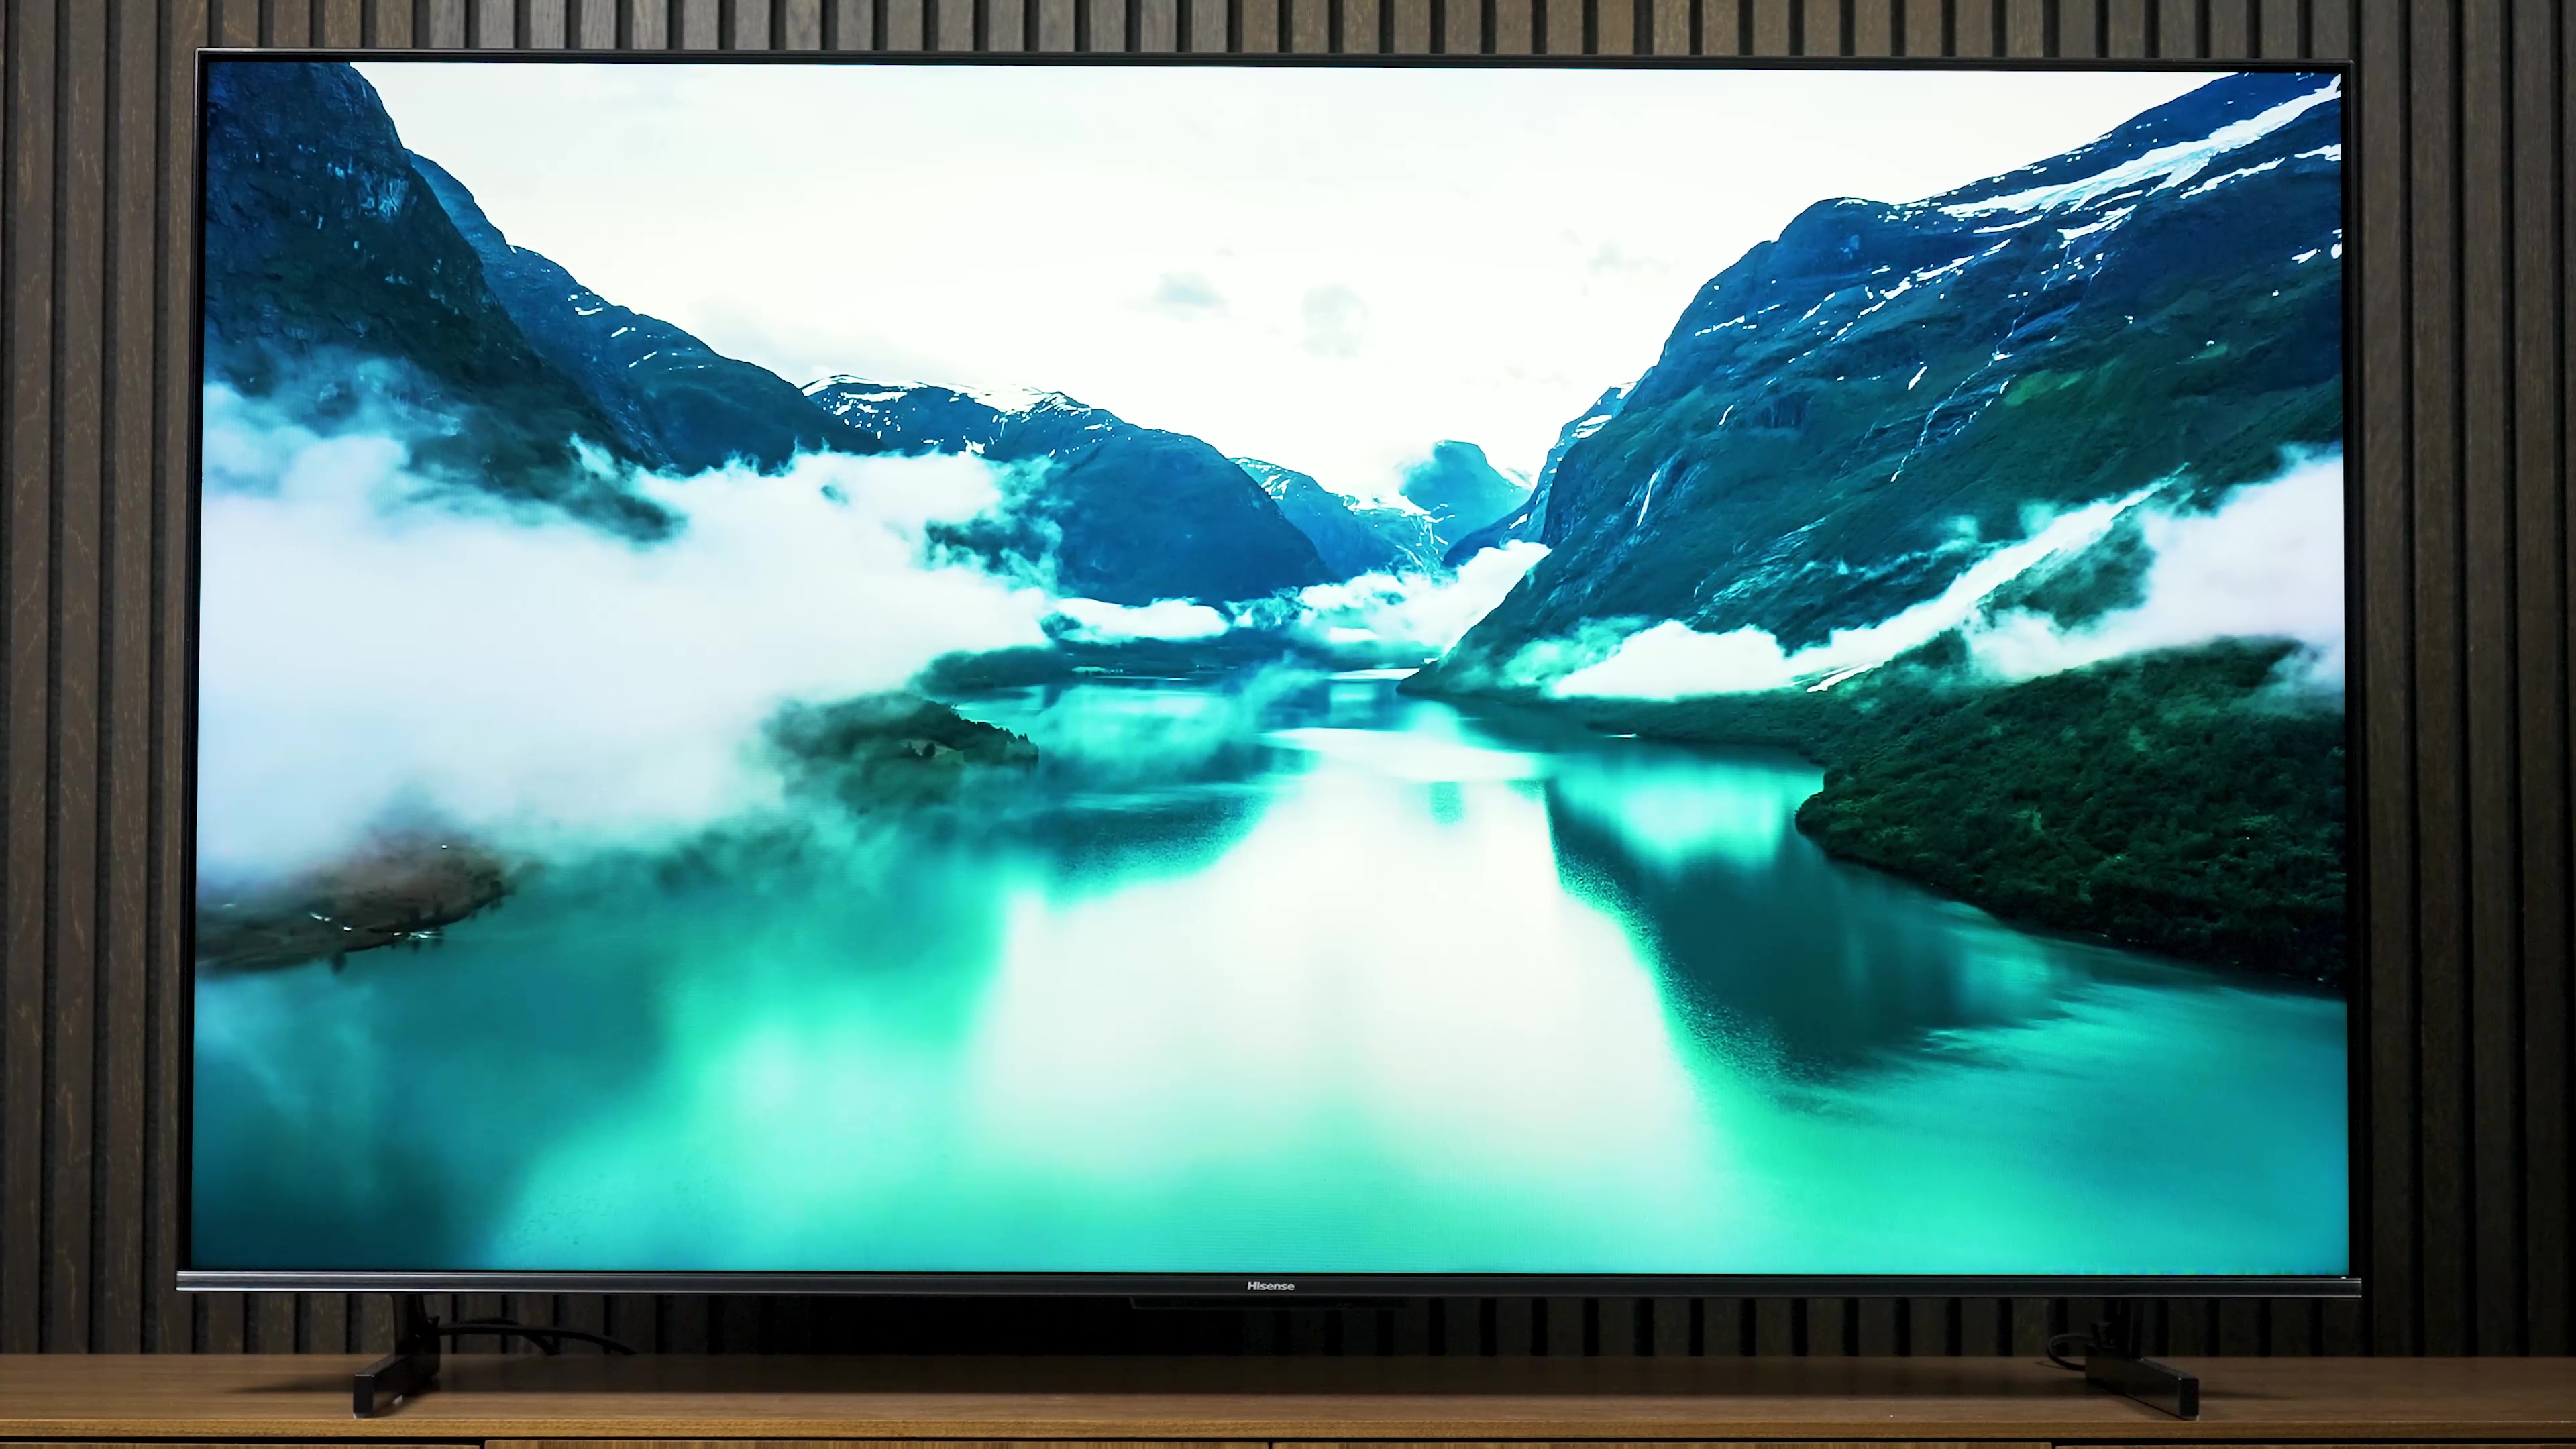 Hisense 100U7K / 100U7KQ 144Hz Mini LED TV is launched in Europe